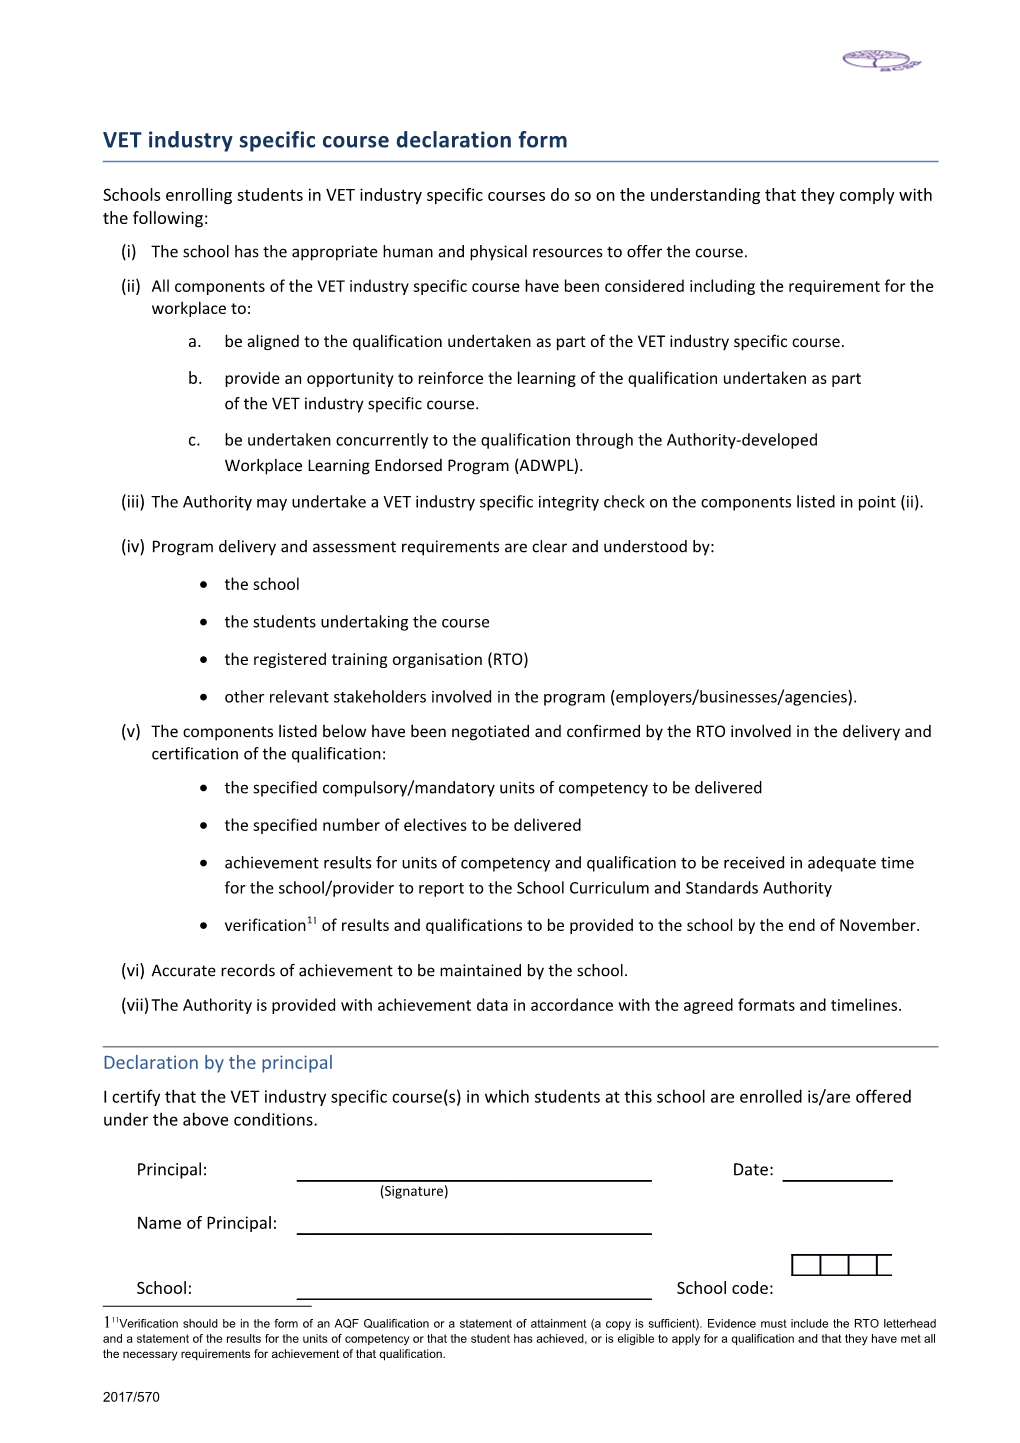 VET Industry Specific Course Declaration Form